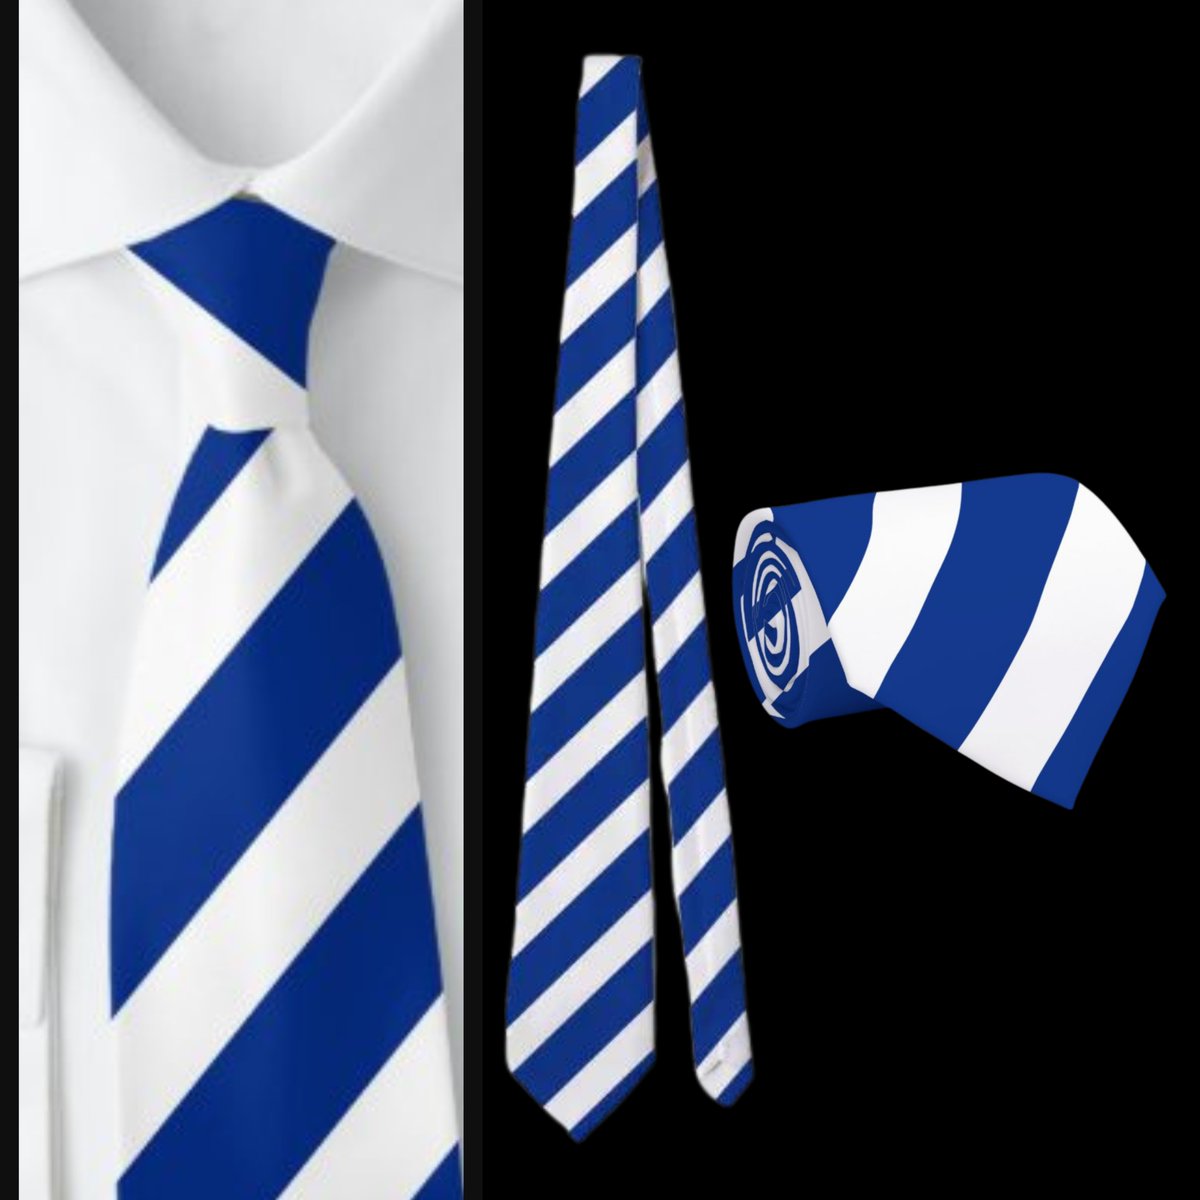 Blue White Striped Pattern Neck Tie zazzle.com/z/aj6j26cq?rf=… via @zazzle #SundayFunday #menswear #necktie #Mensfashion #gifts #GIFTforX #dad #boyfriend #women #de_fi #fashion #multi #clothing #brand #llc #official #clothingbrand #clothingline #clothingstore